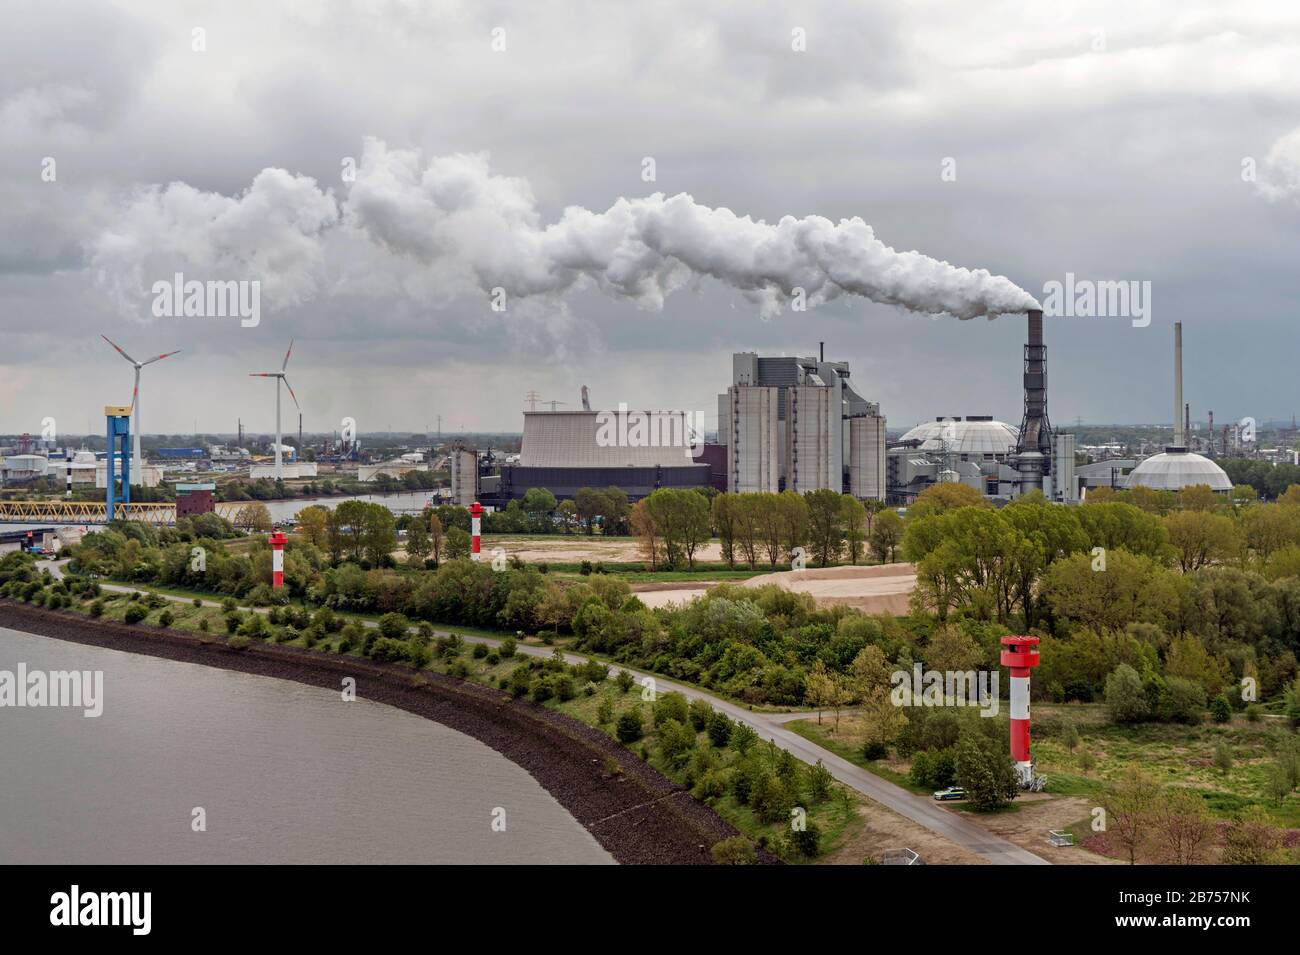 Germany, Hamburg, 06.05.2019. The Moorburg im Hamburg coal-fired power plant on 06.05.2019. [automated translation] Stock Photo